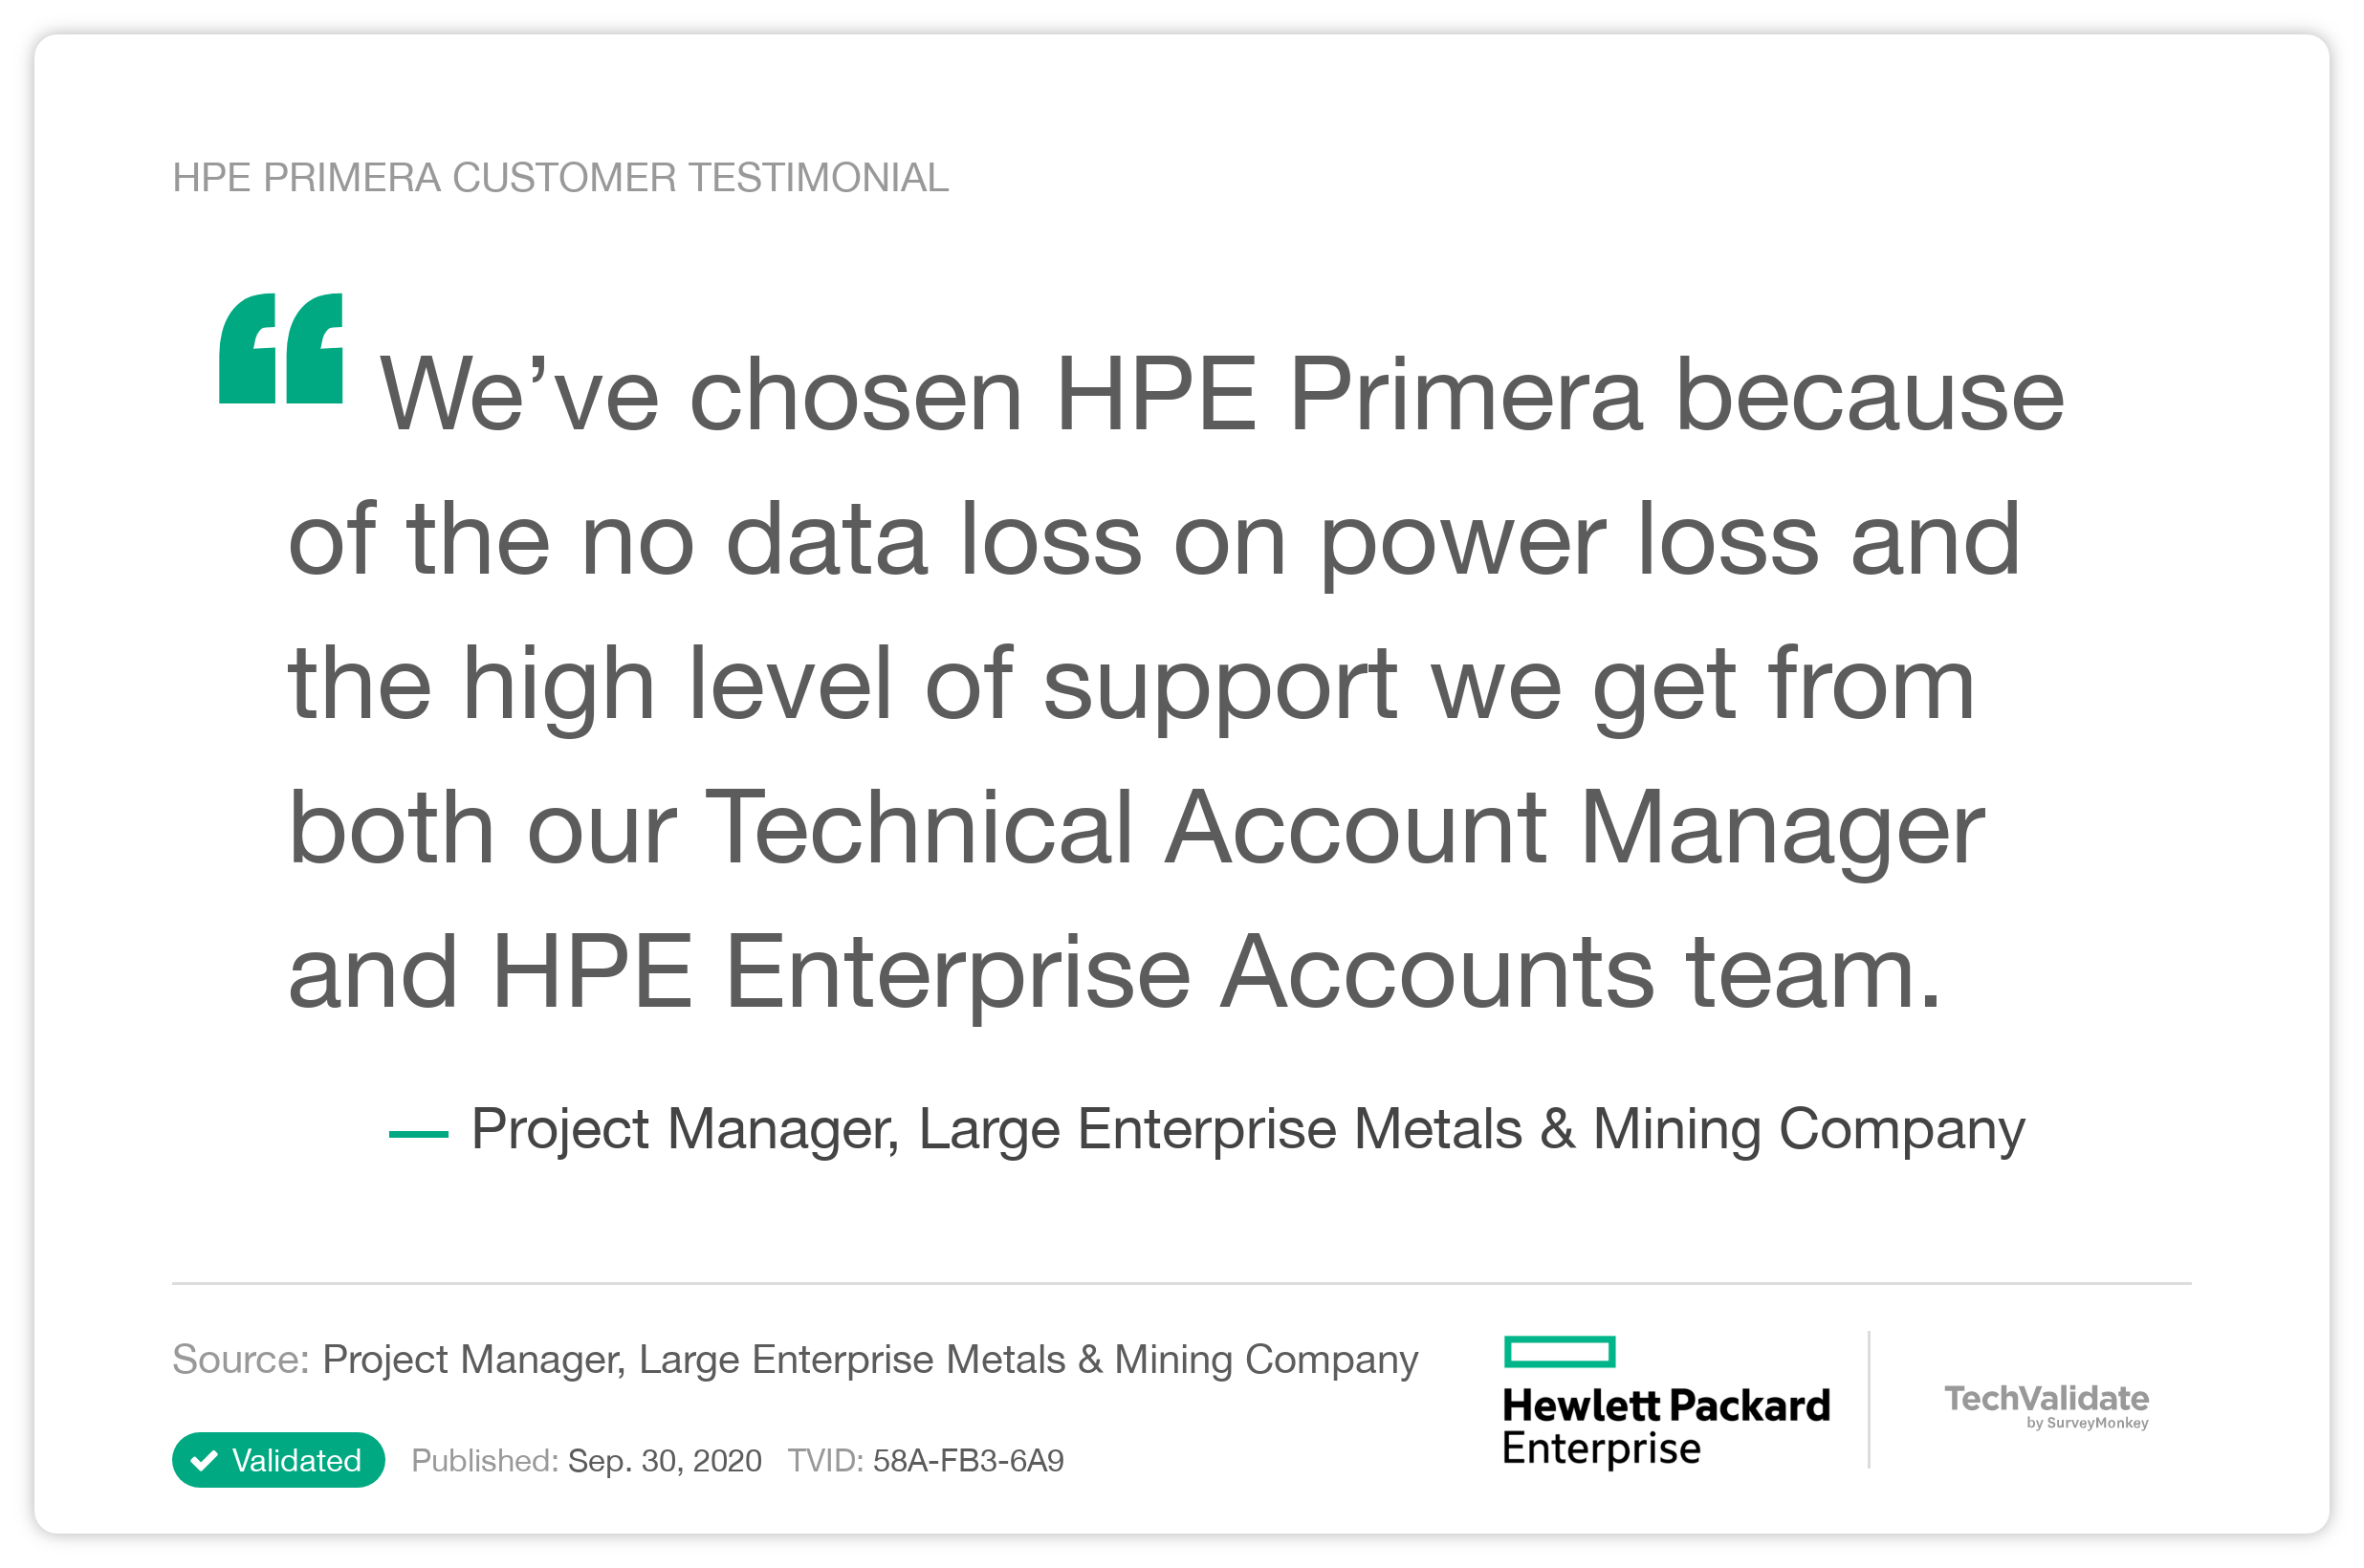 HPE Primera Customer Testimonial